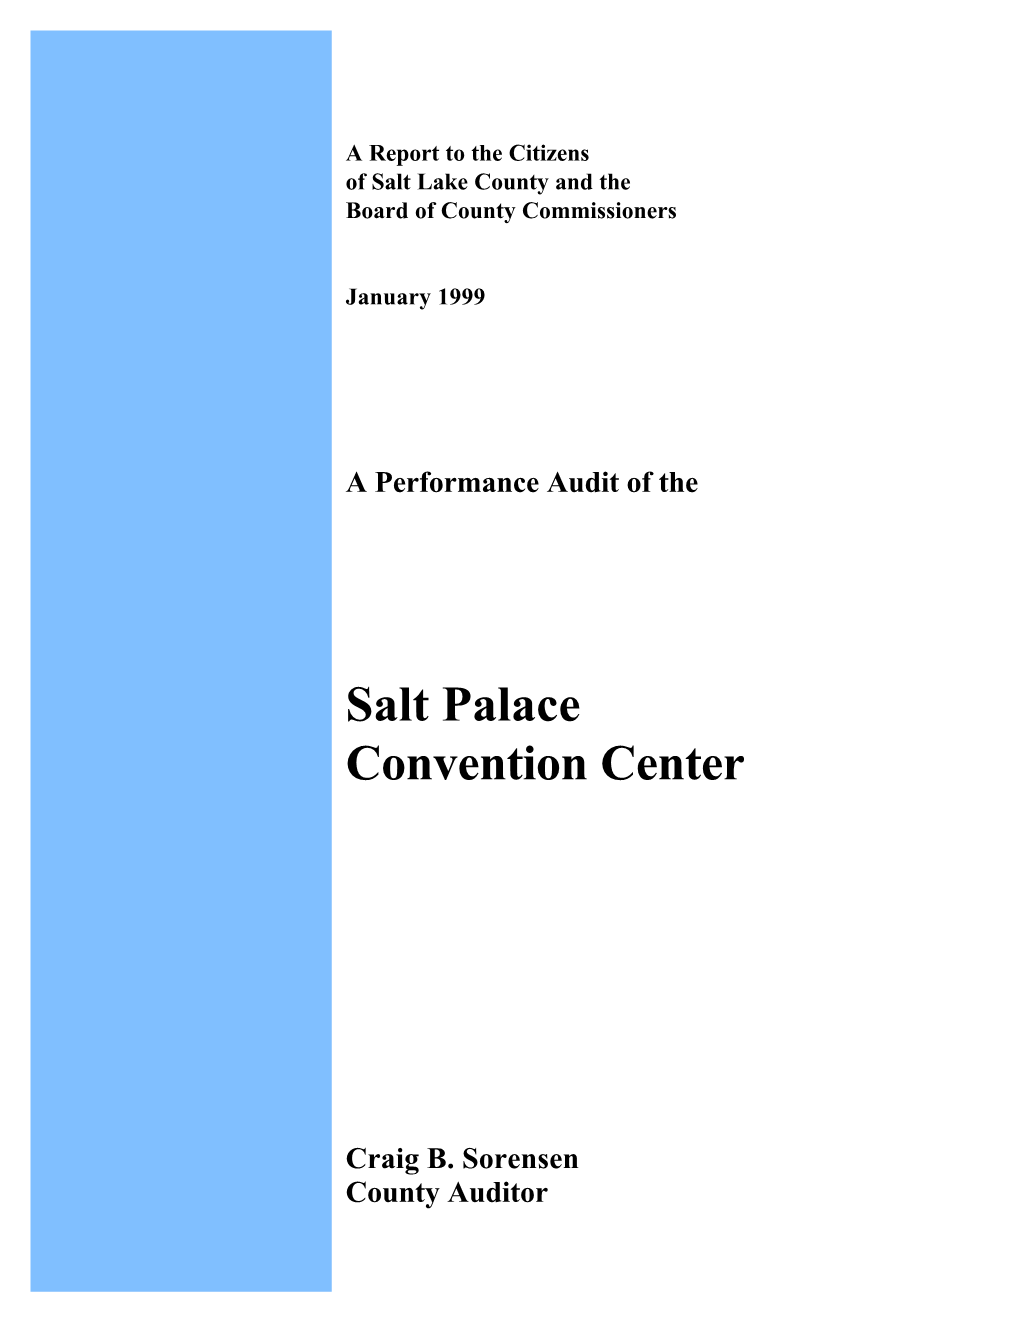 Performance Audit of Salt Palace Convention Center